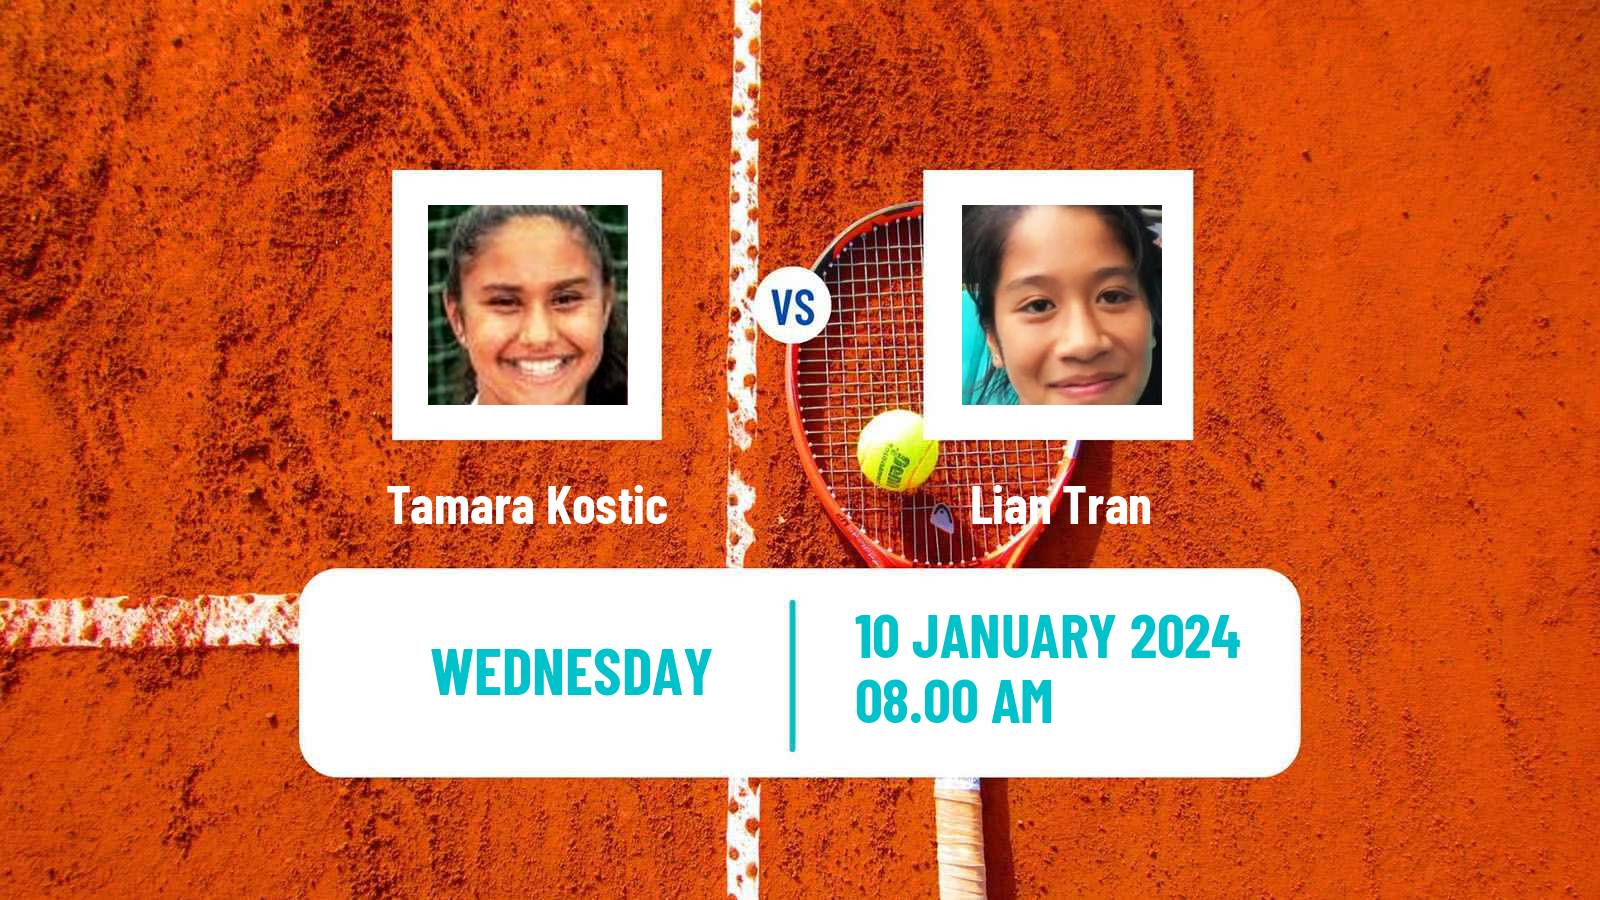 Tennis ITF W15 Esch Alzette Women Tamara Kostic - Lian Tran